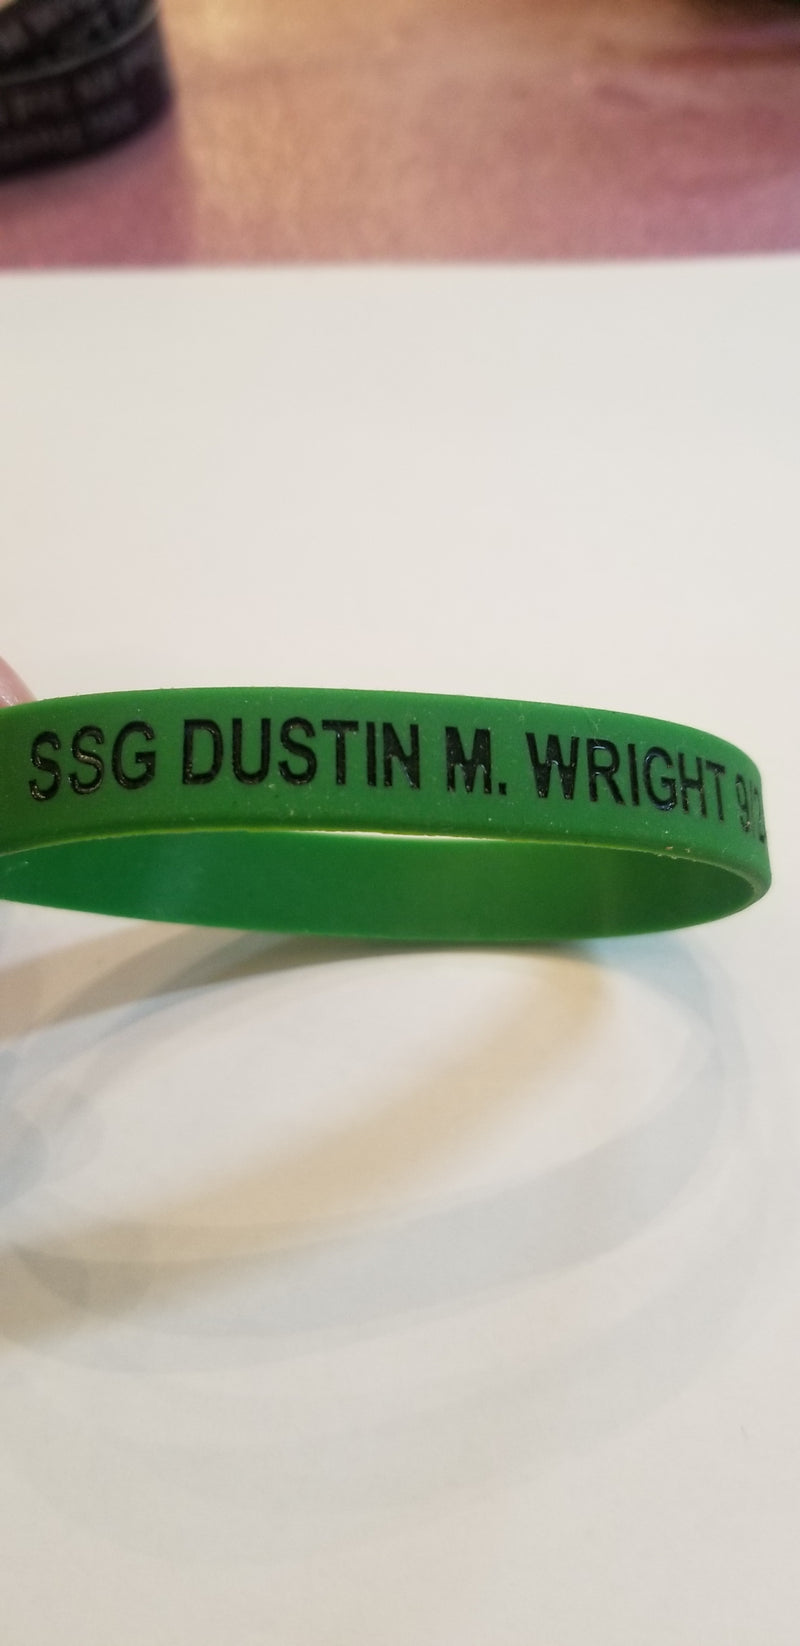 SSG Dustin M. Wright Silicone Wristband